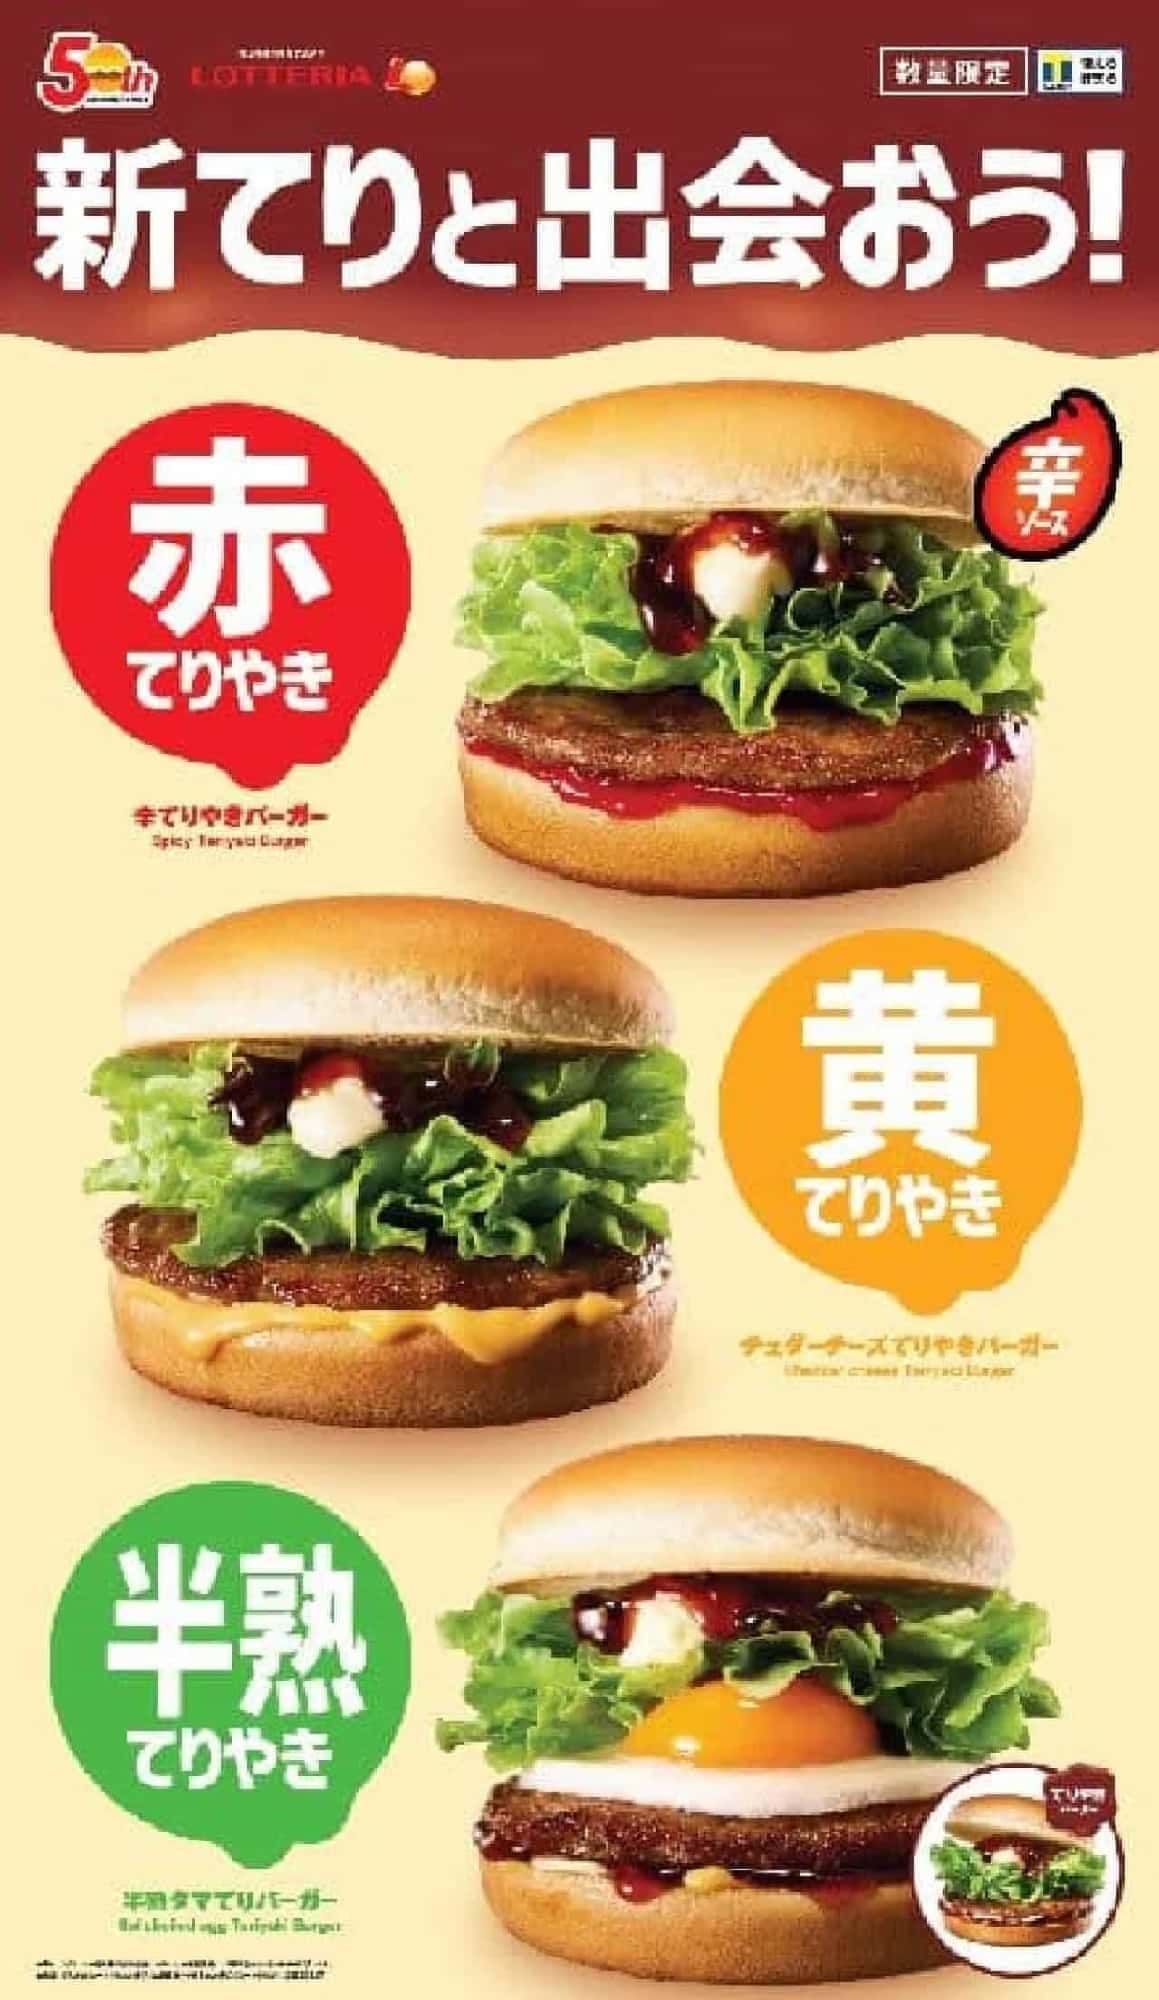 Lotteria "Spicy Toriyaki Burger" and "Cheddar Cheese Toriyaki Burger